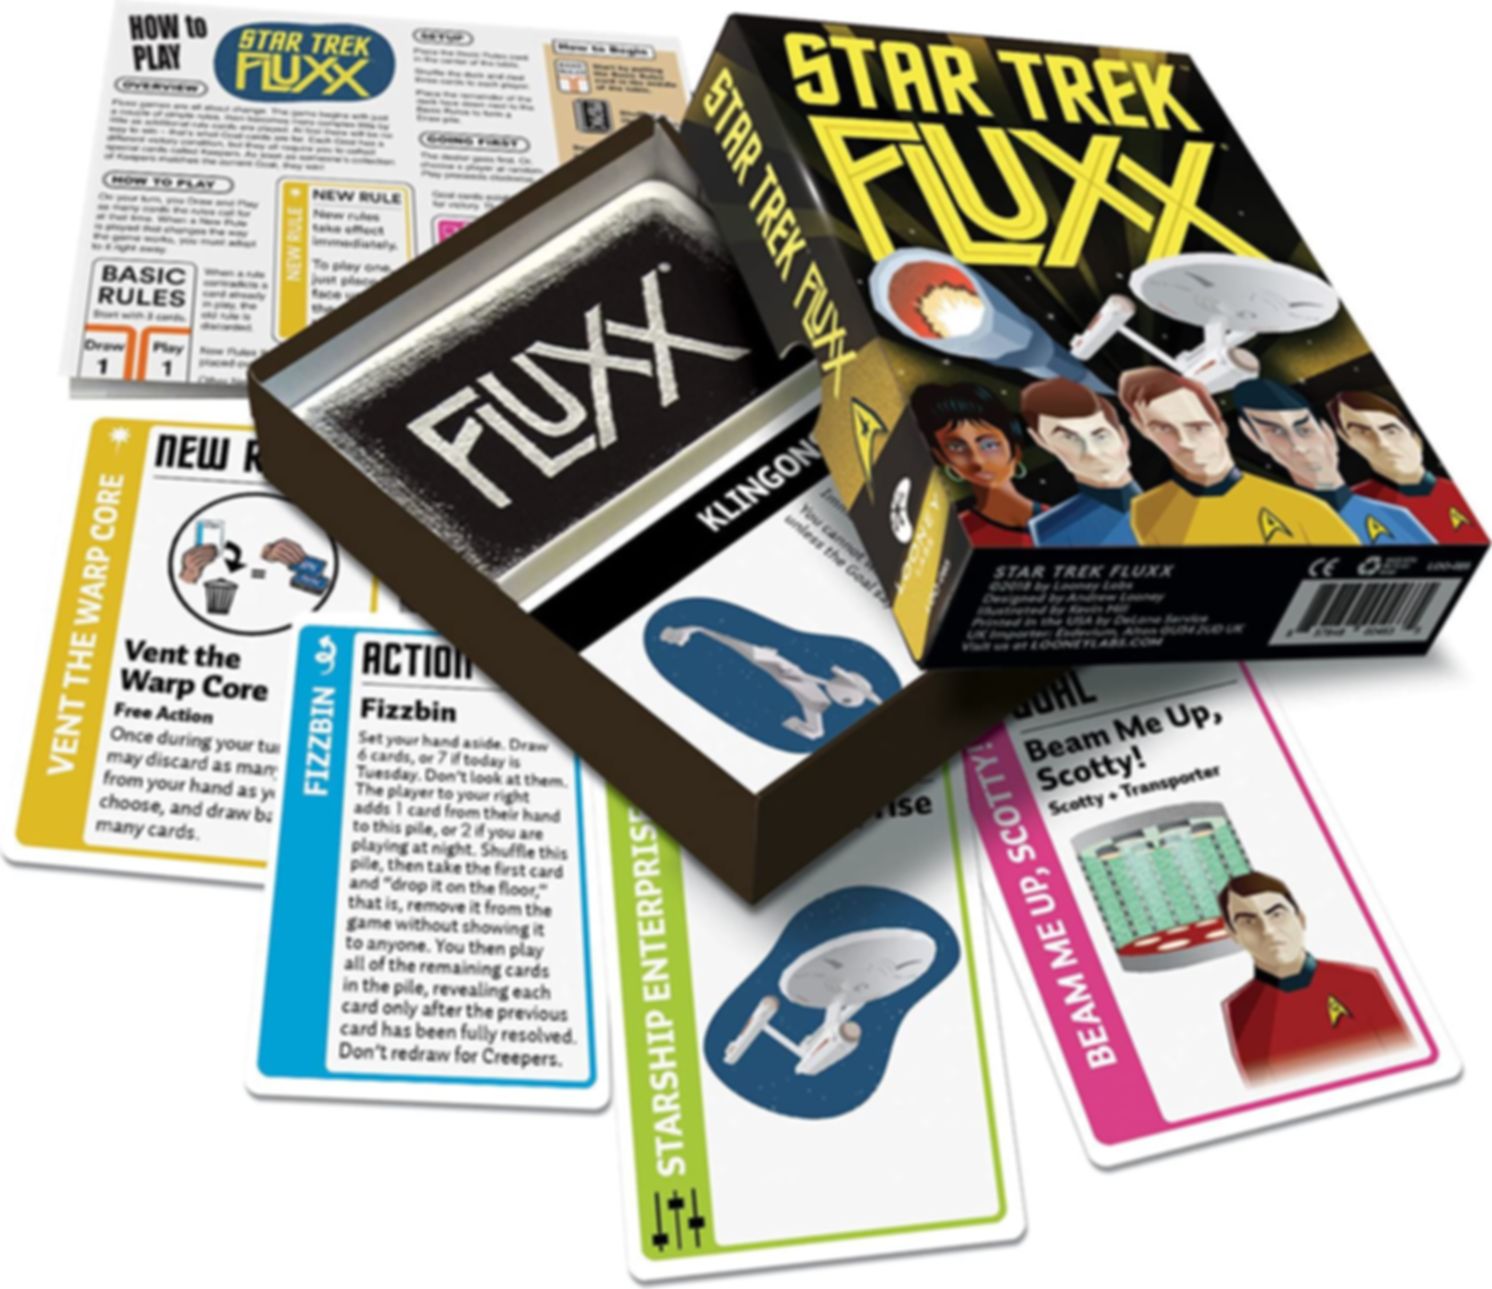 Star Trek Fluxx composants